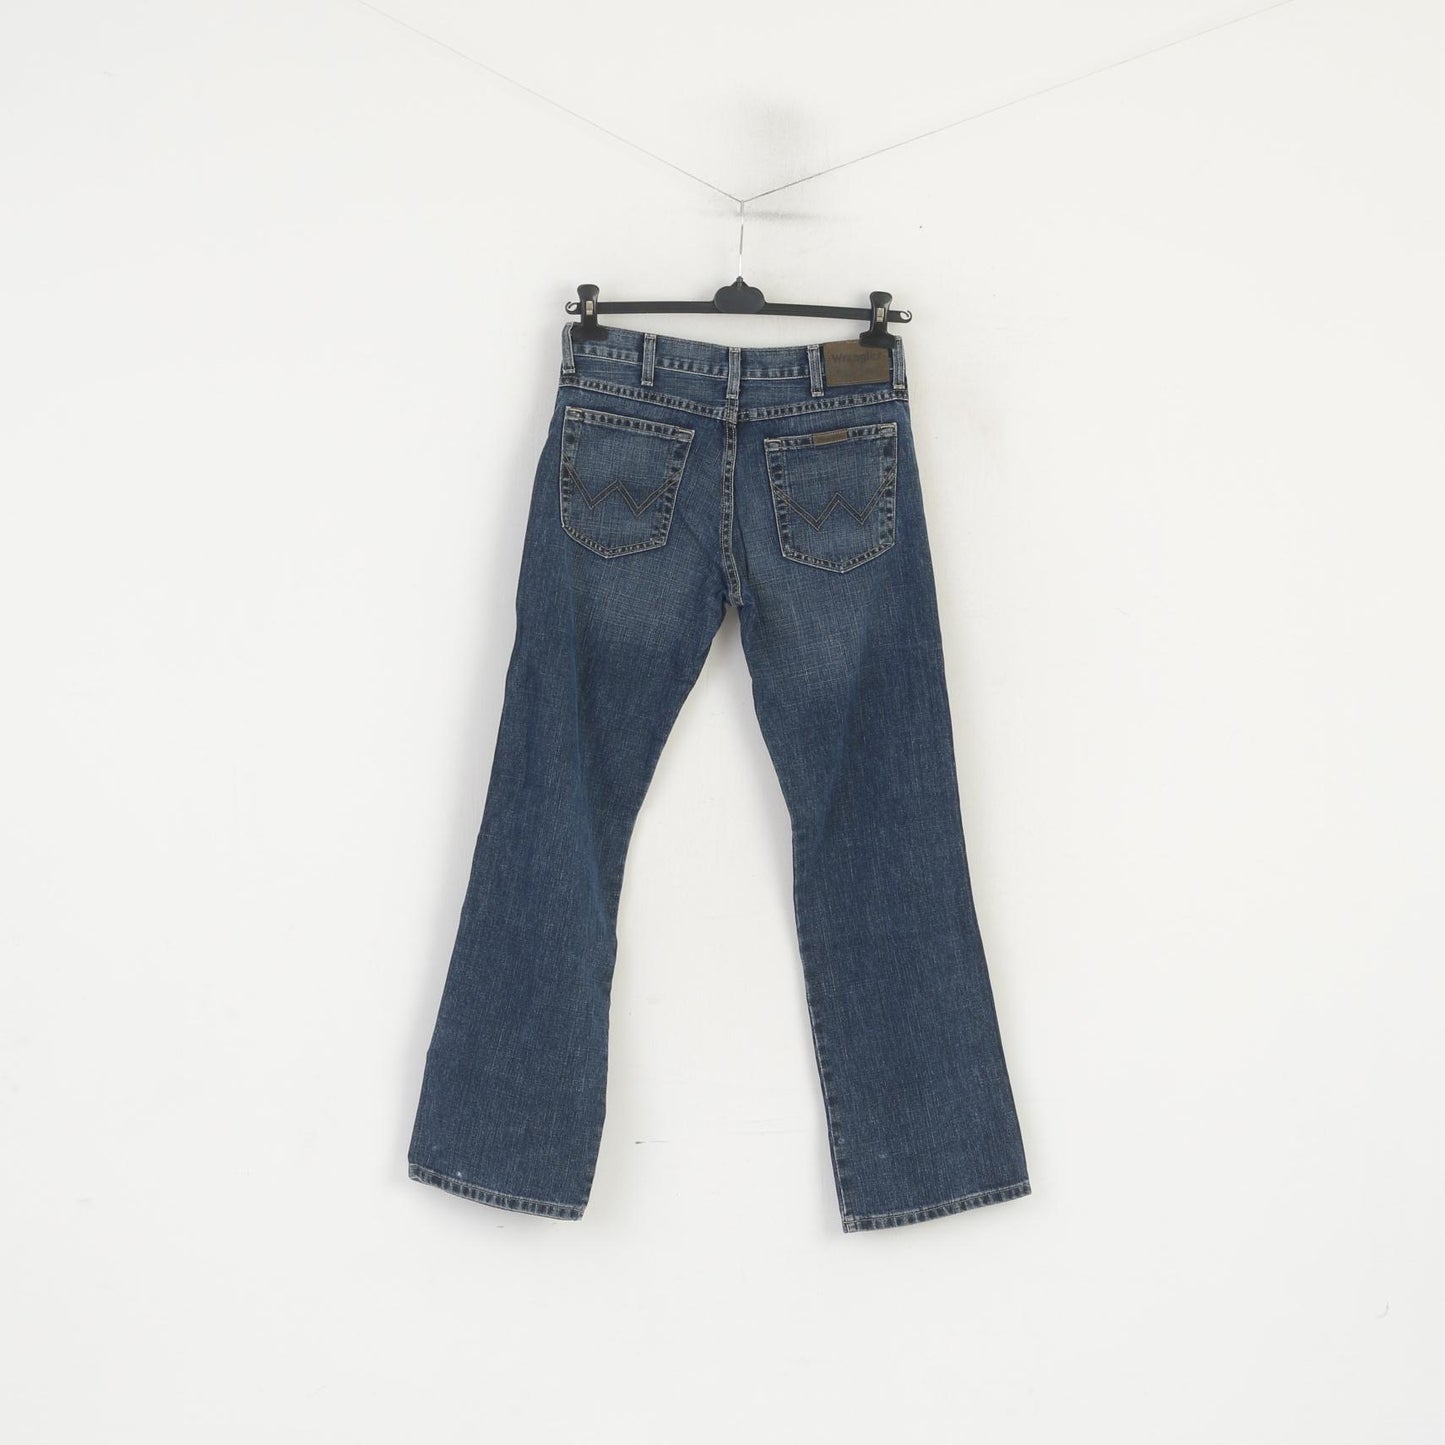 Pantaloni jeans Wrangler da donna 30 Pantaloni bootcut vintage in cotone denim blu scuro